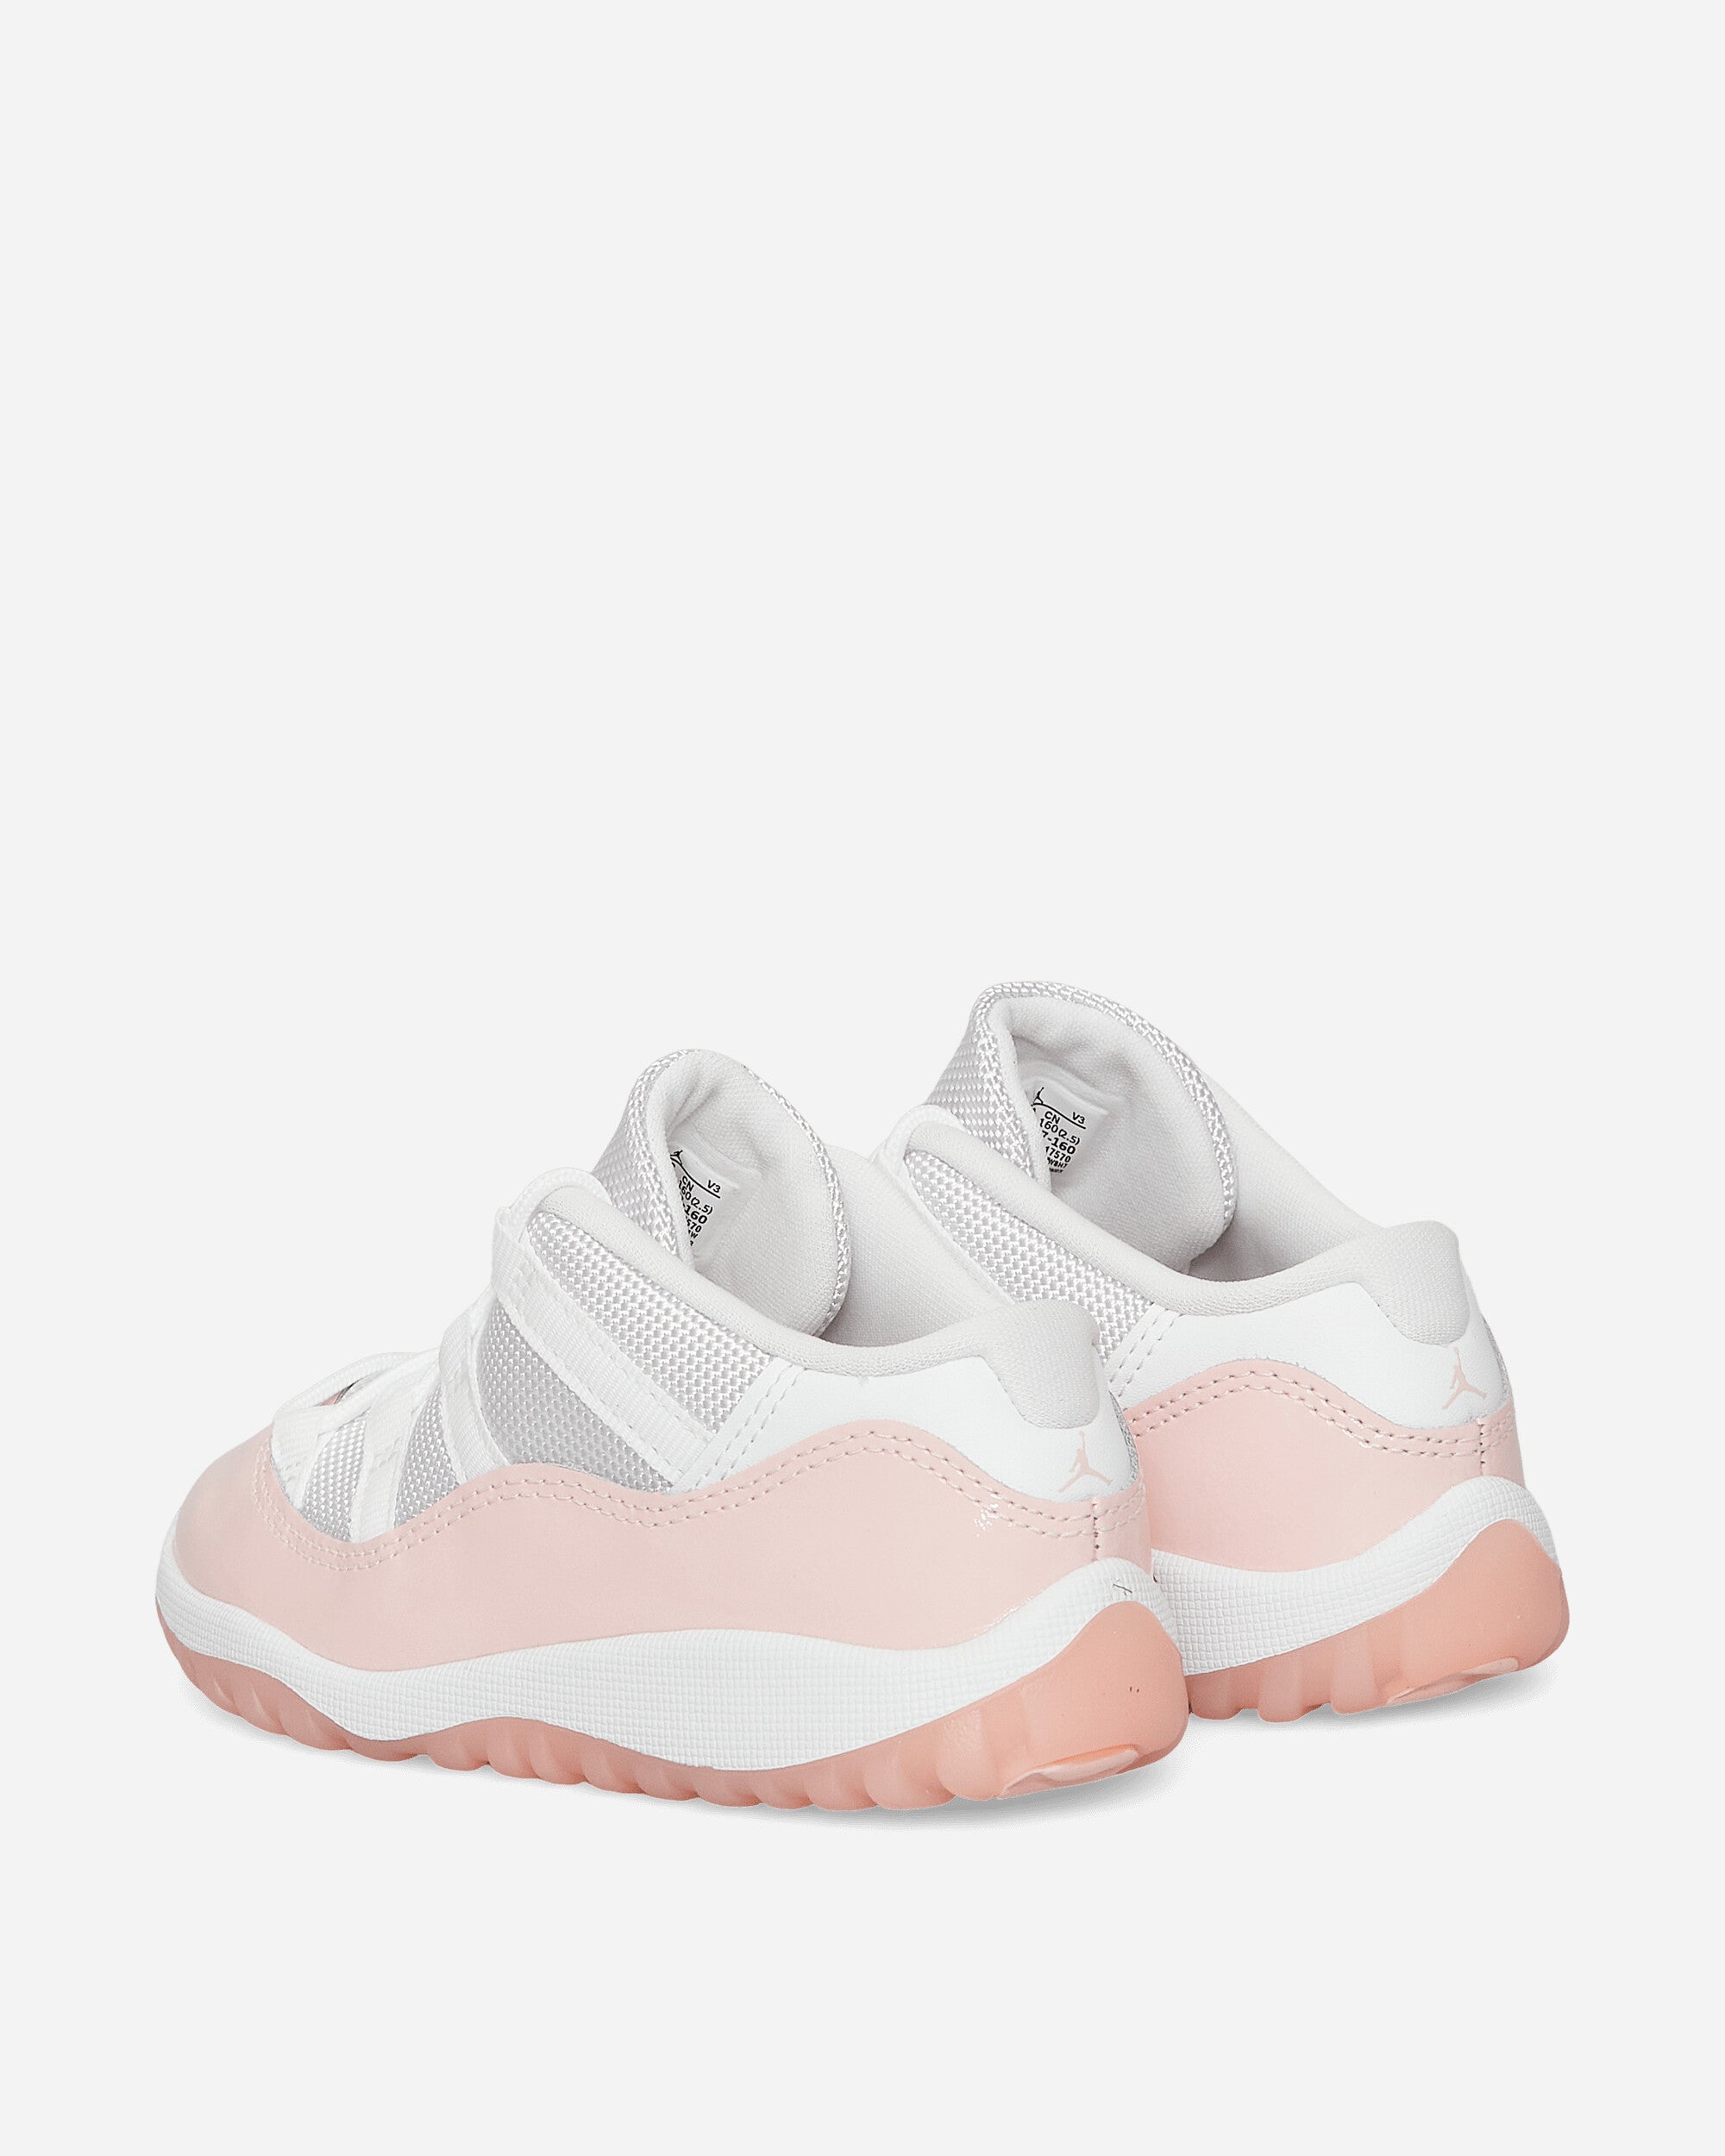 Nike Jordan Jordan 11 Retro Low (Td) White/Legend Pink Sneakers Low 645107-160